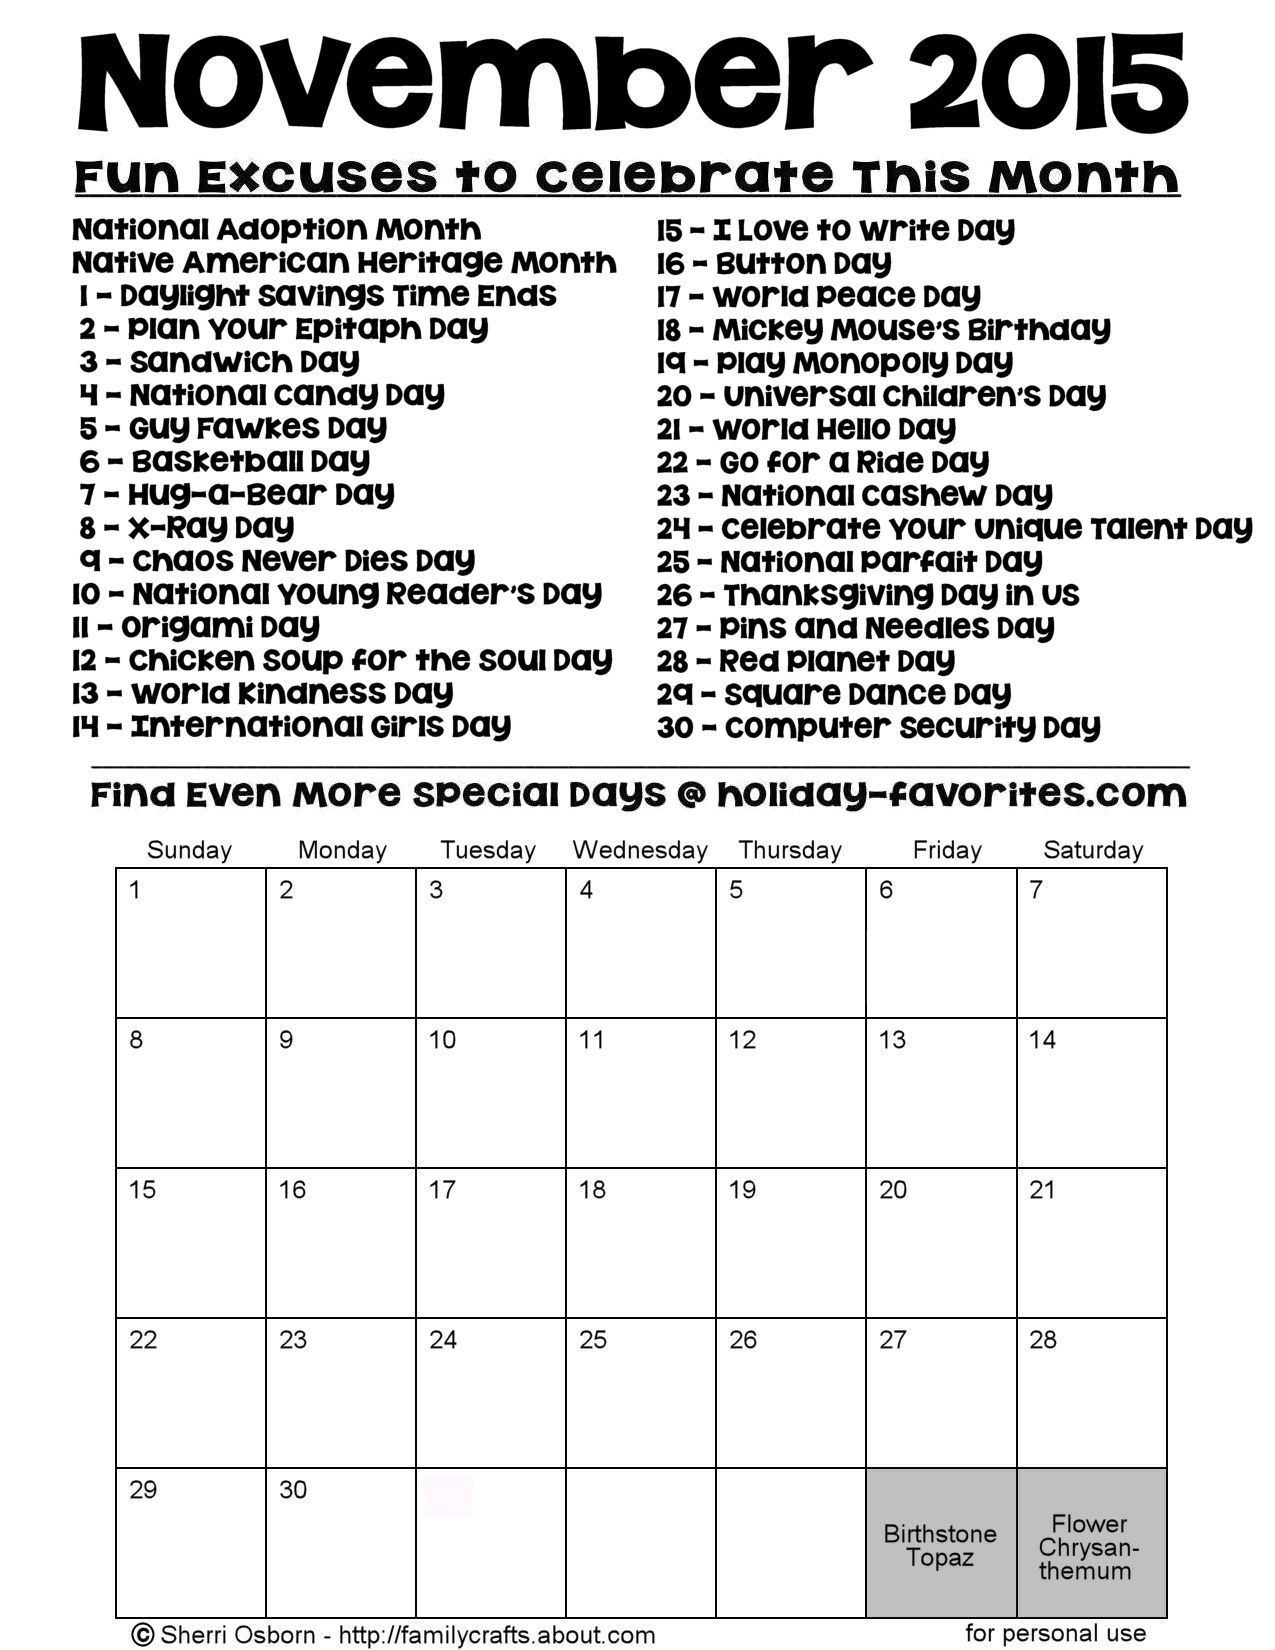 Printable November Calendars | Holiday Favorites